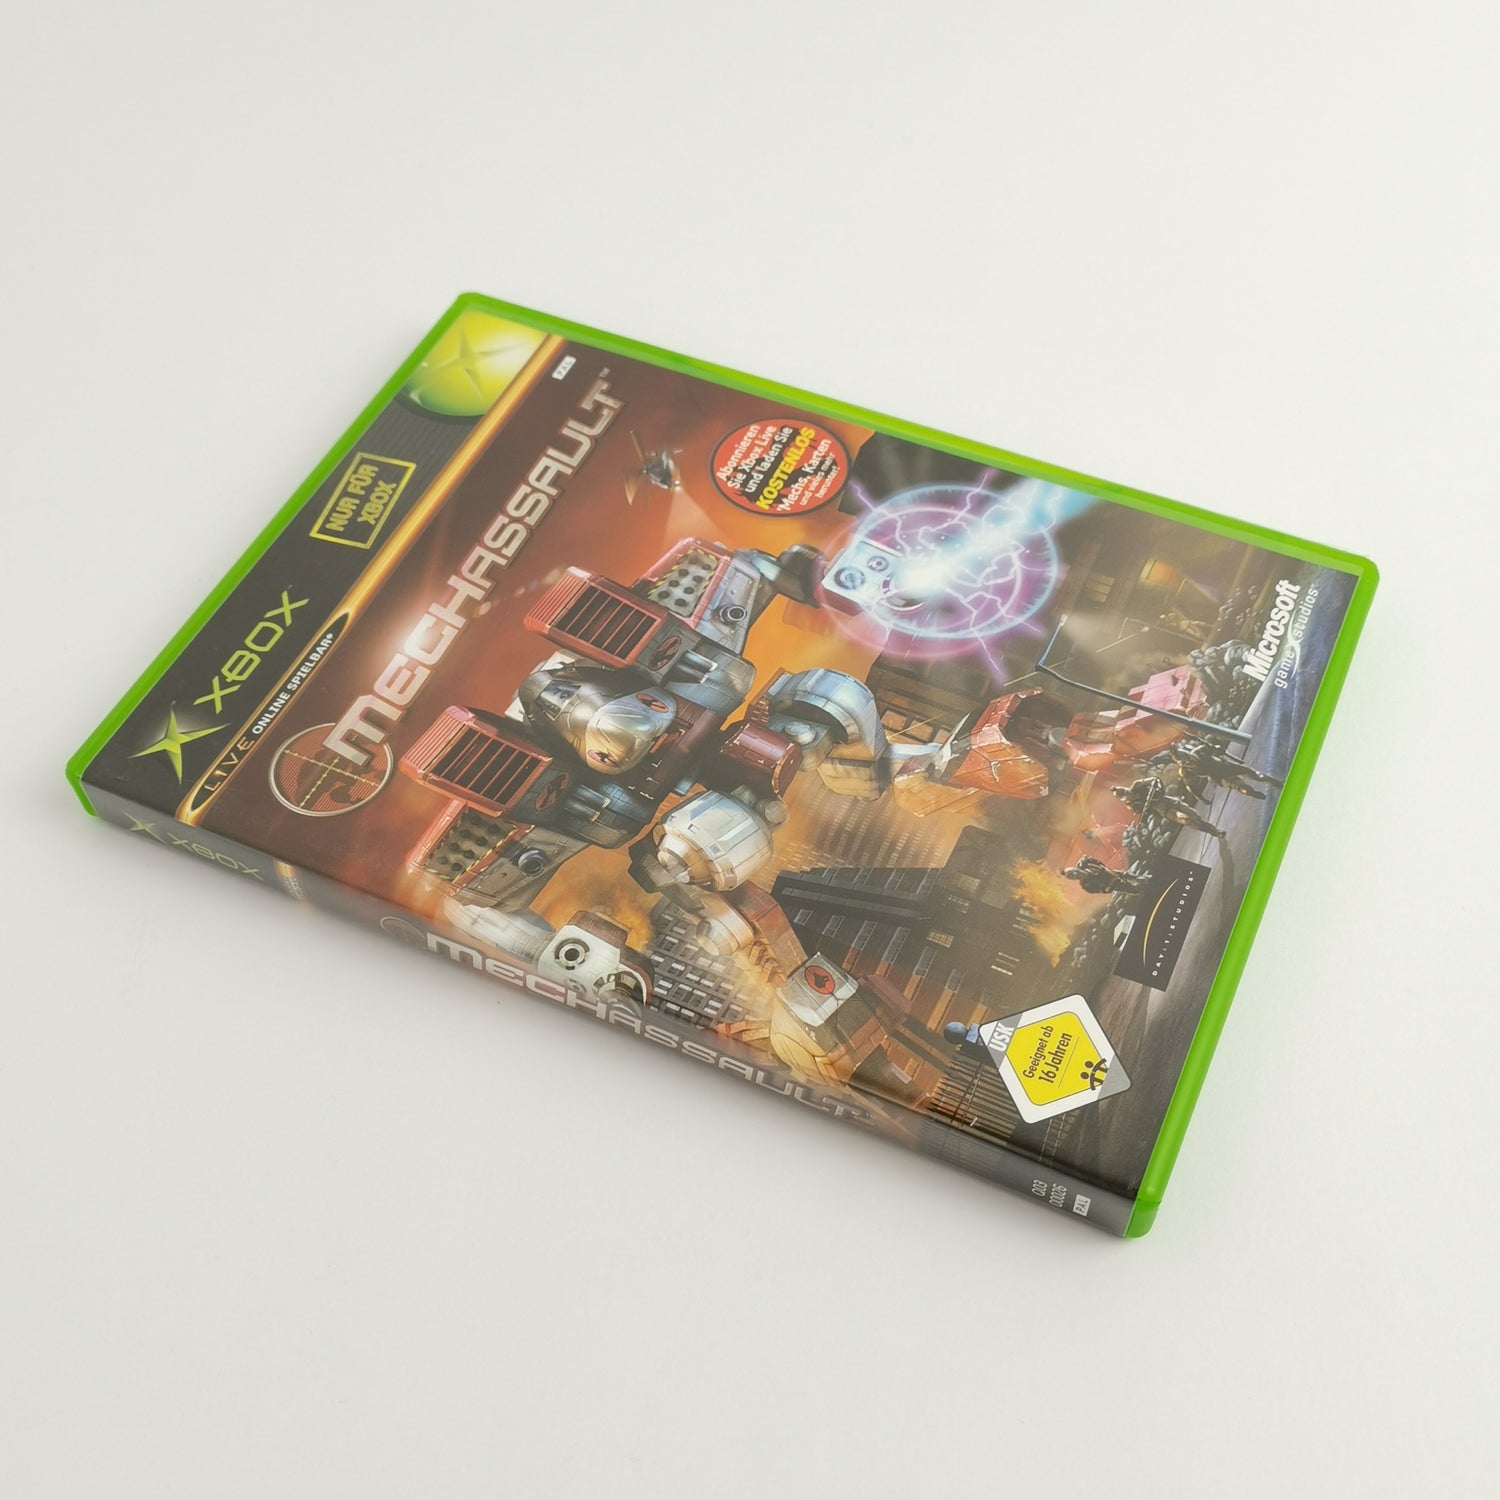 Microsoft Xbox Classic Spiel : Mechassault - Game Studios | OVP - PAL